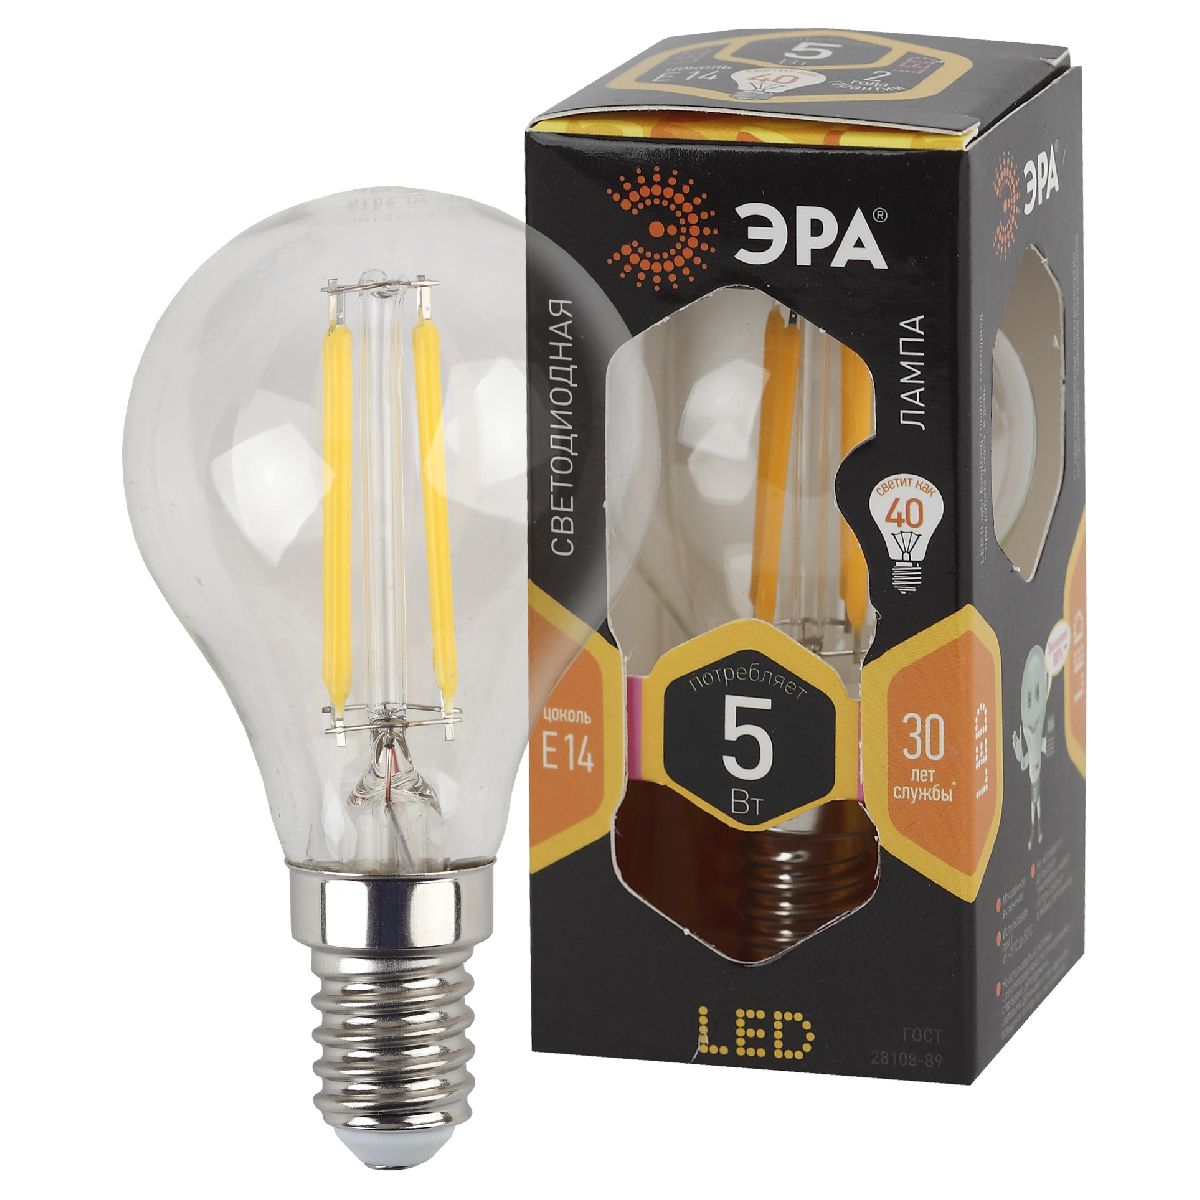 Лампа светодиодная Эра E14 5W 2700K F-LED P45-5W-827-E14 Б0043437